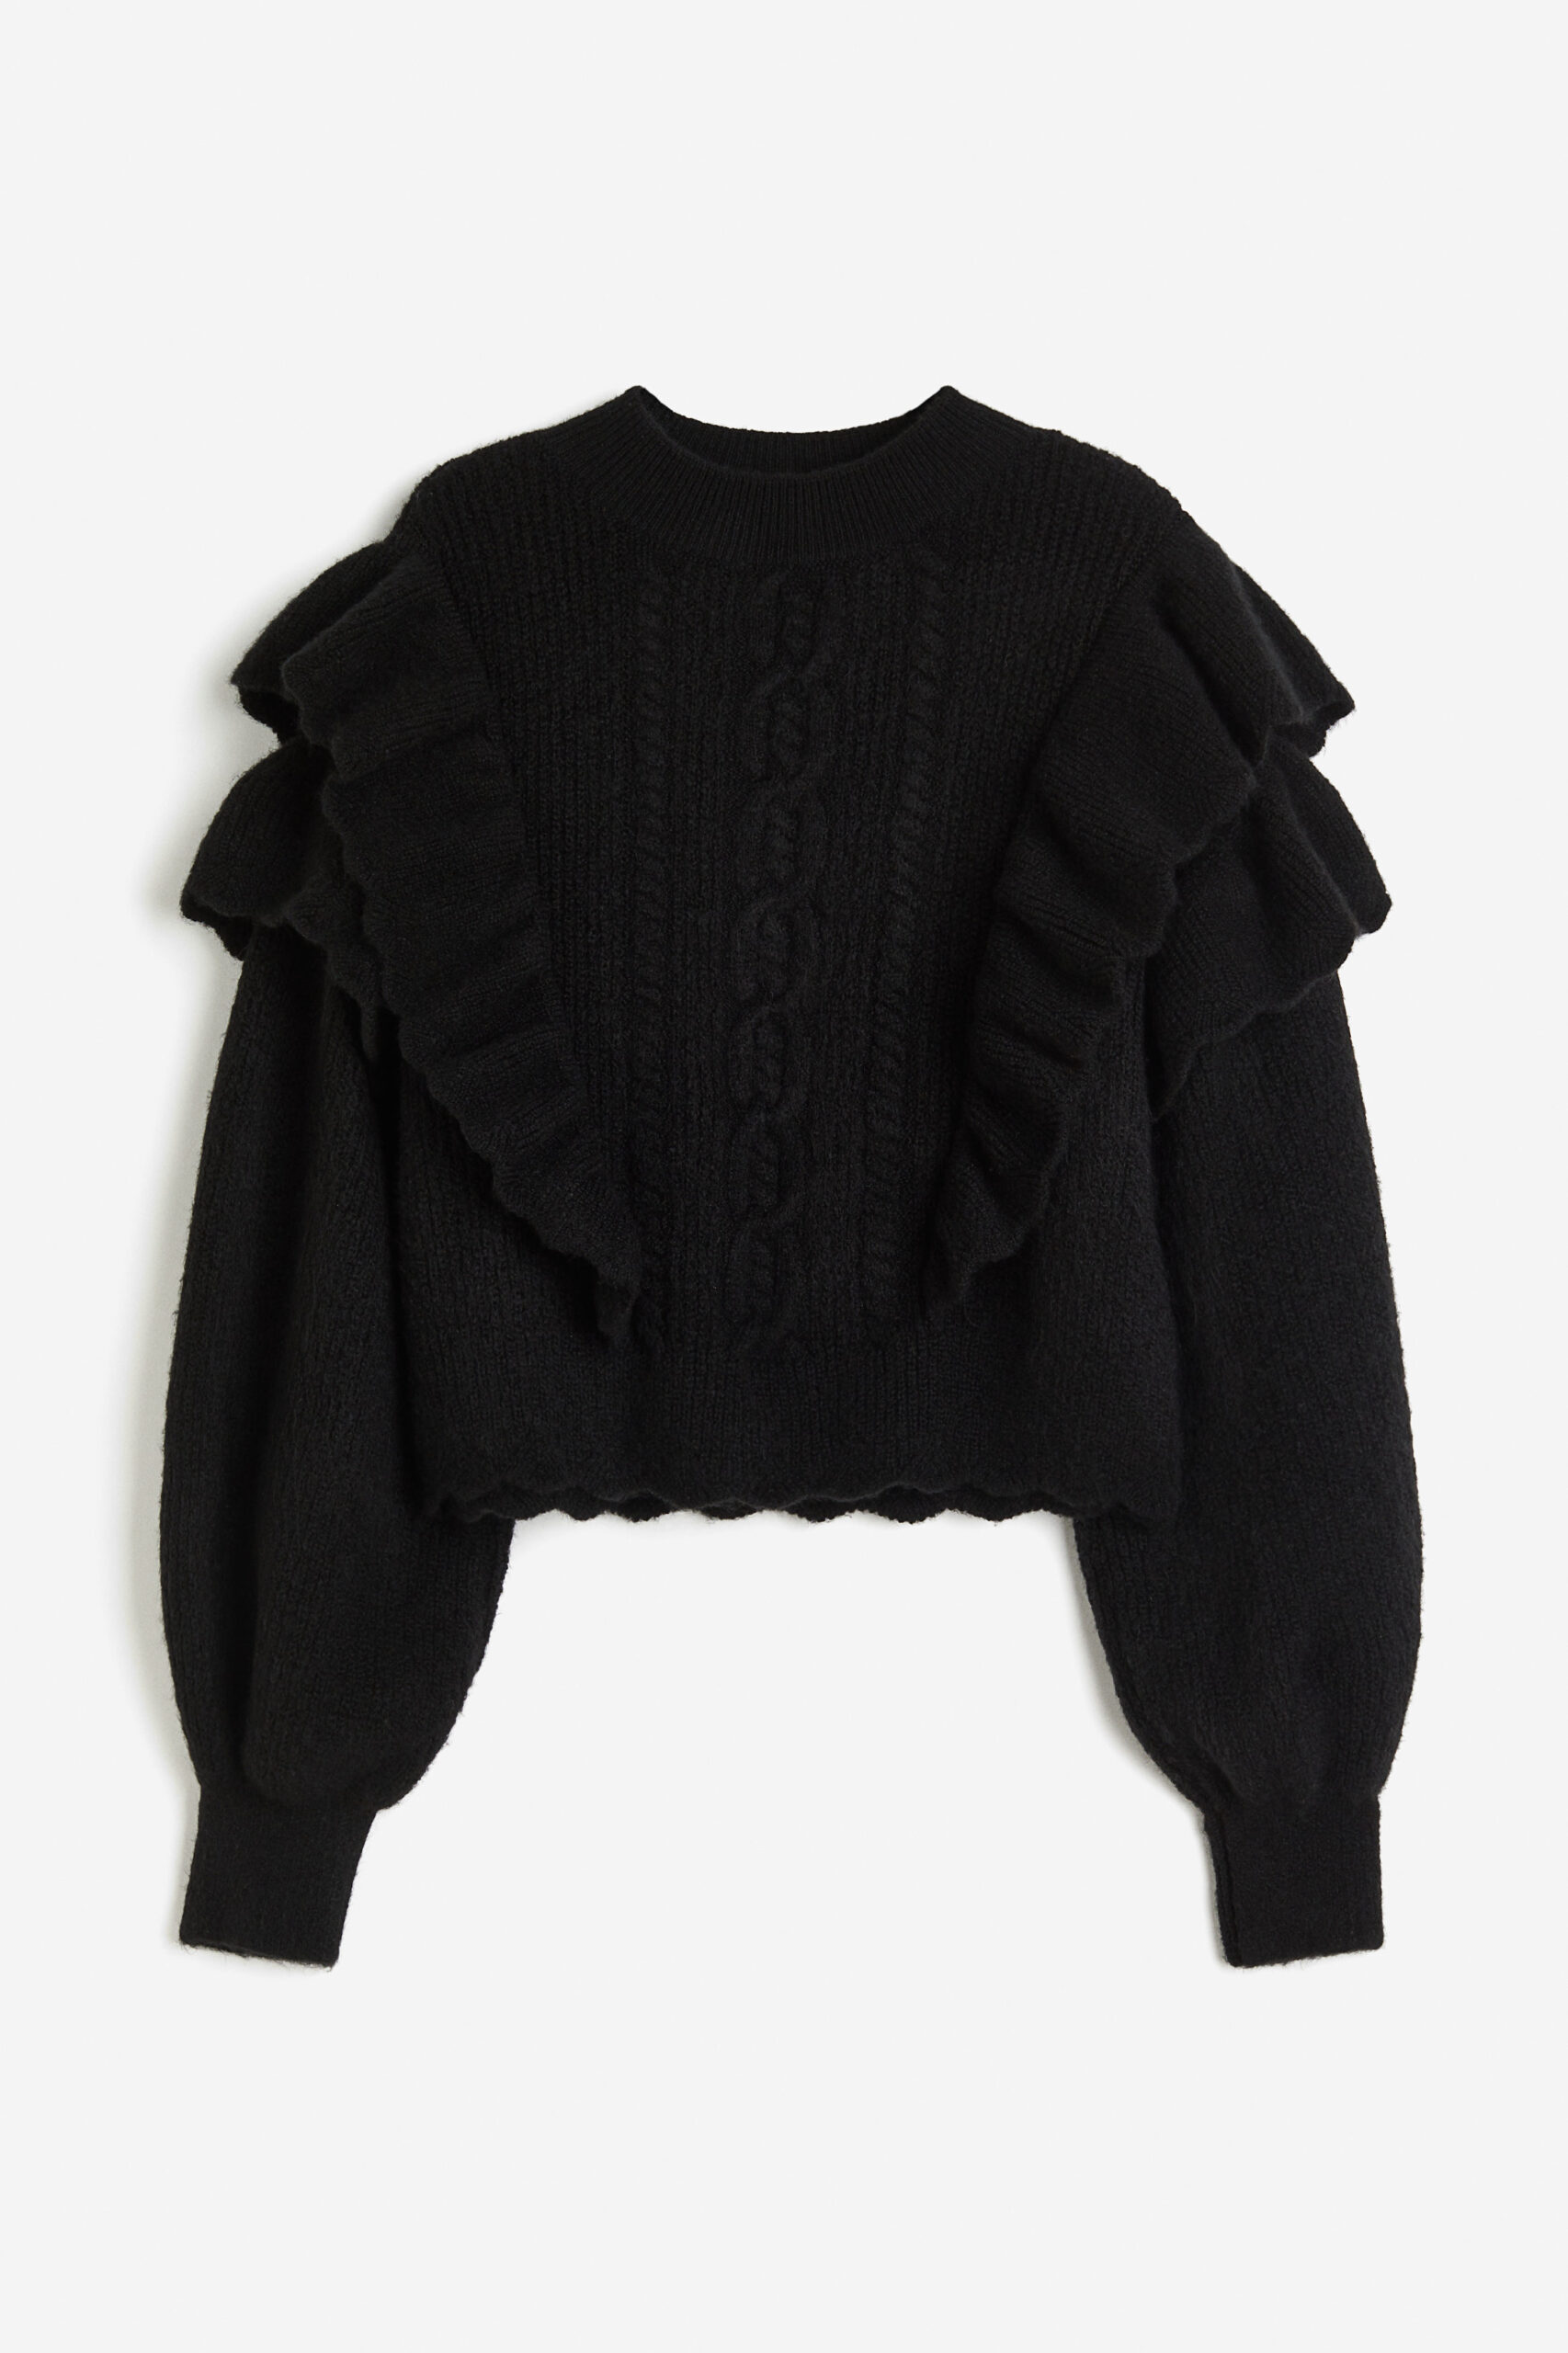 Black knit sweater.